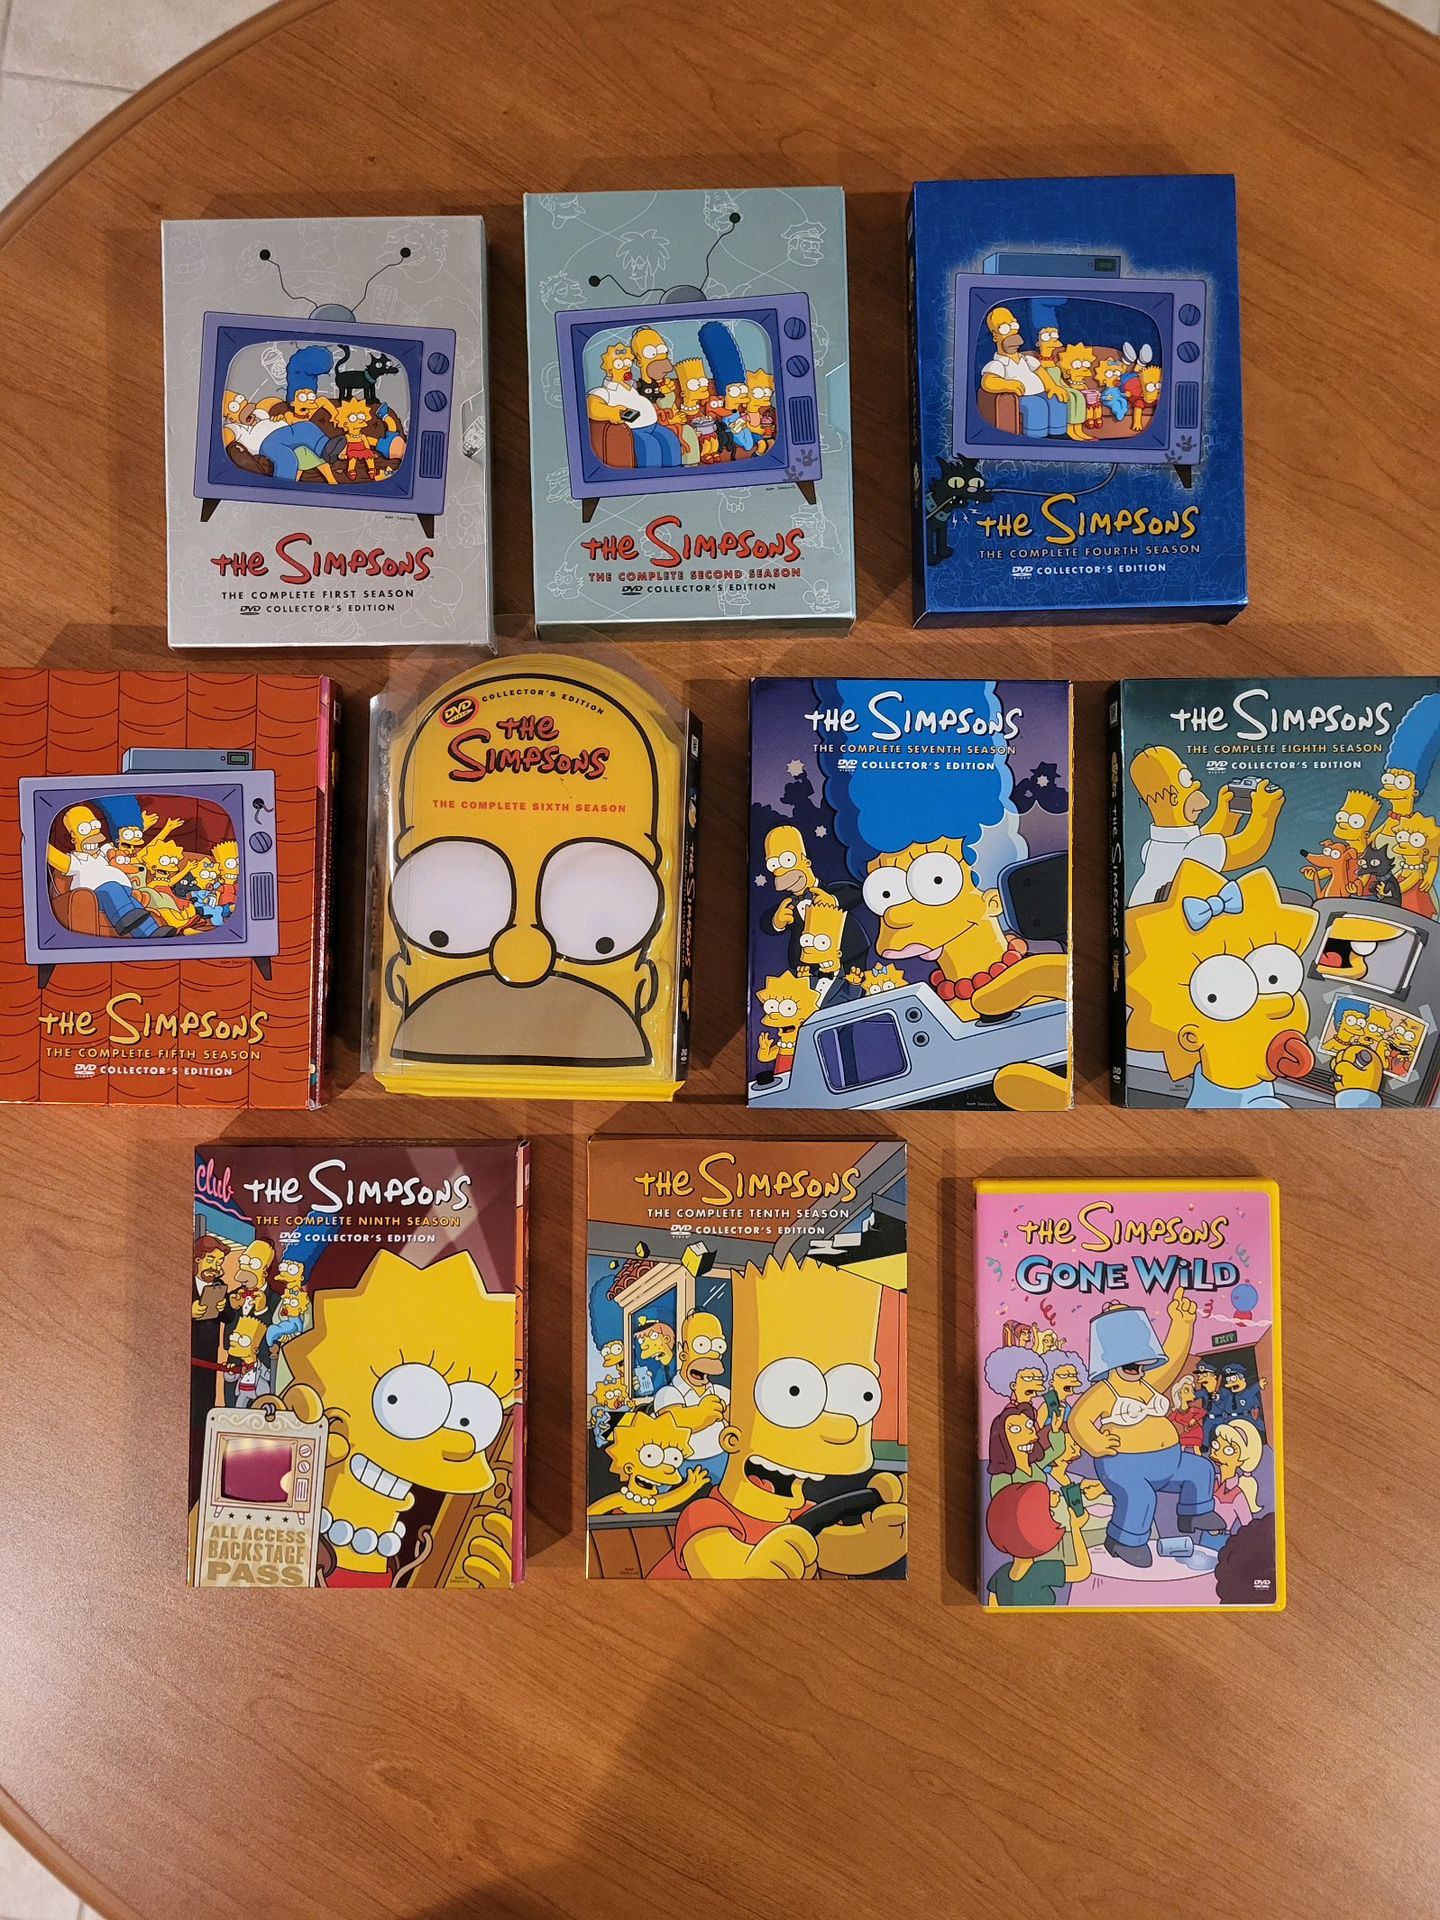 Simpson 9 Seasons (missing Season 3) And Simpsons Gone Wild DVDs